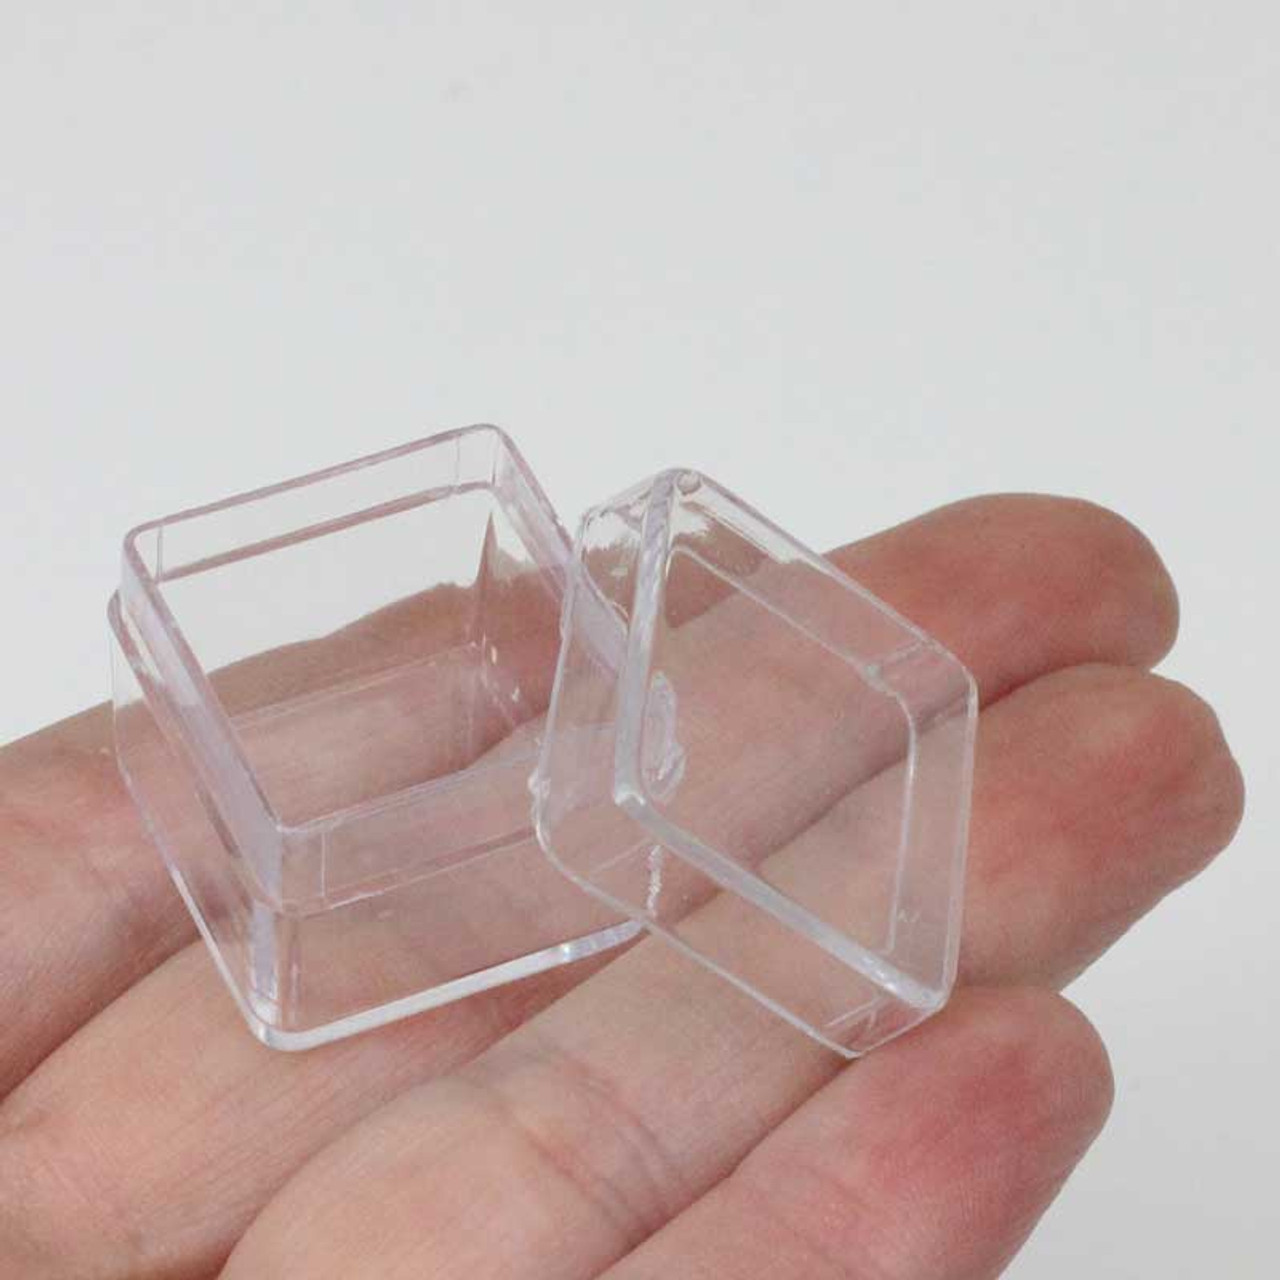 Small Thin Empty Plastic Assortment Box with Five Compartments | Esslinger